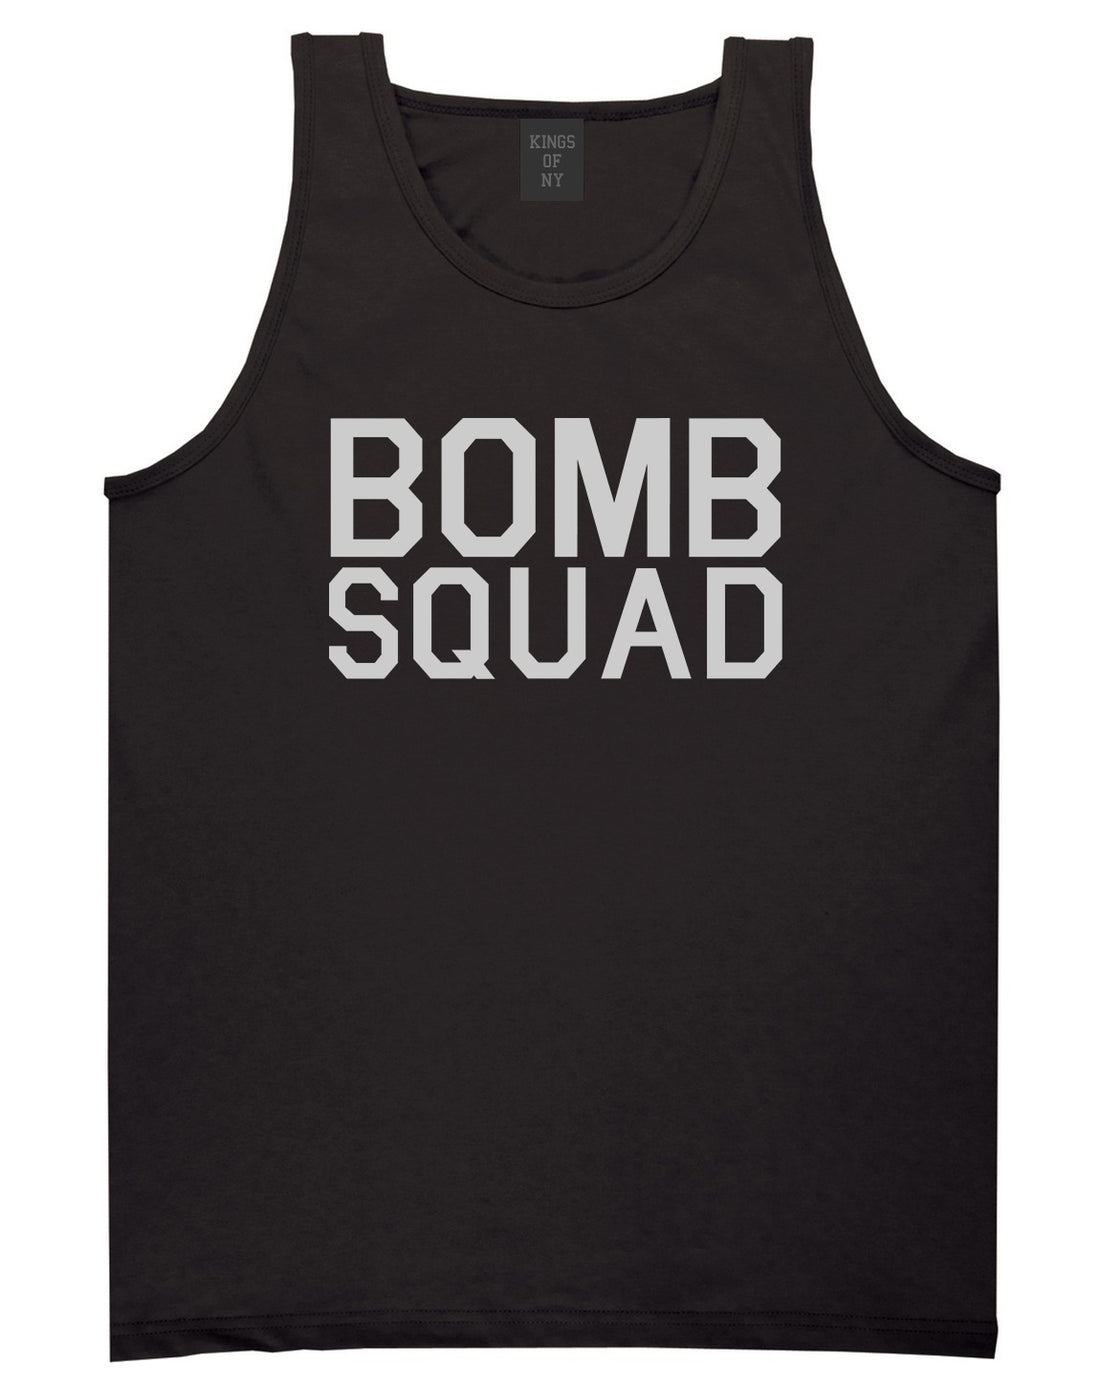 Bomb Squad Black Tank Top Shirt by Kings Of NY